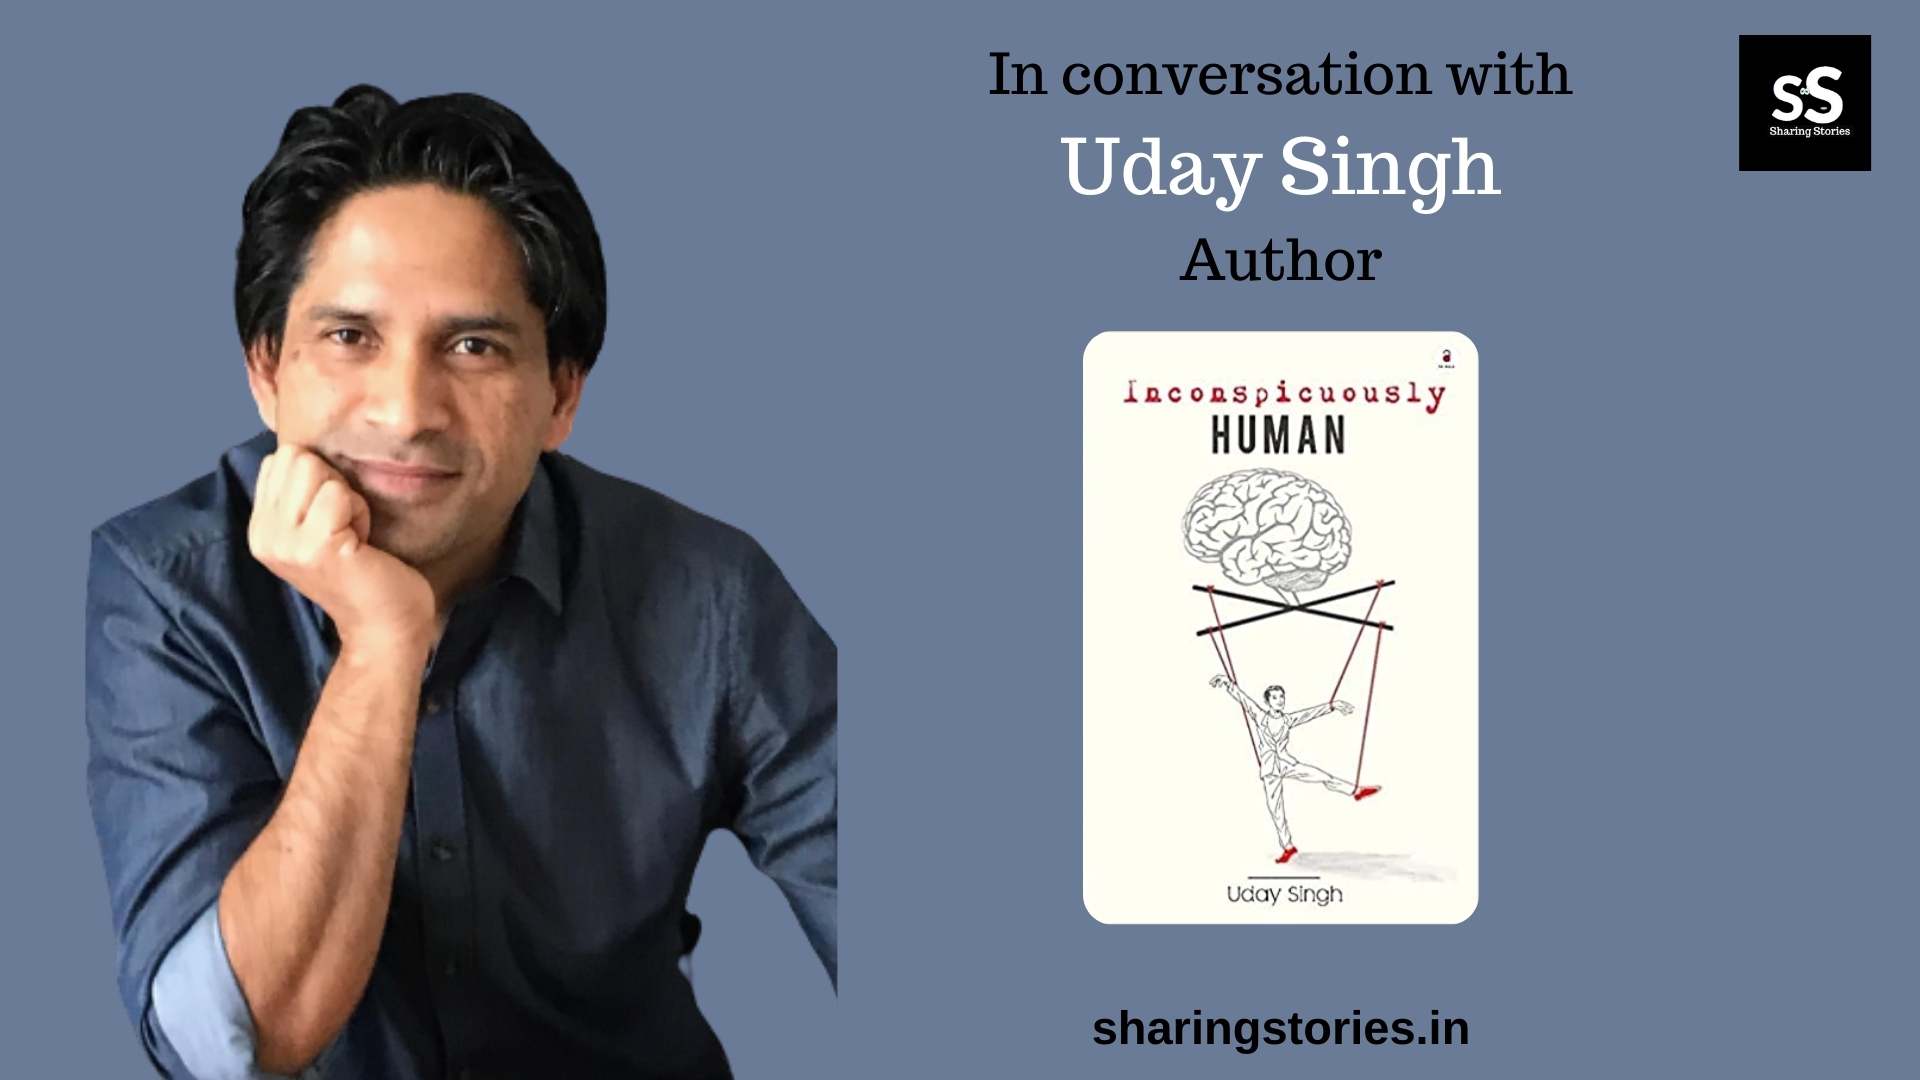 Author Uday Singh